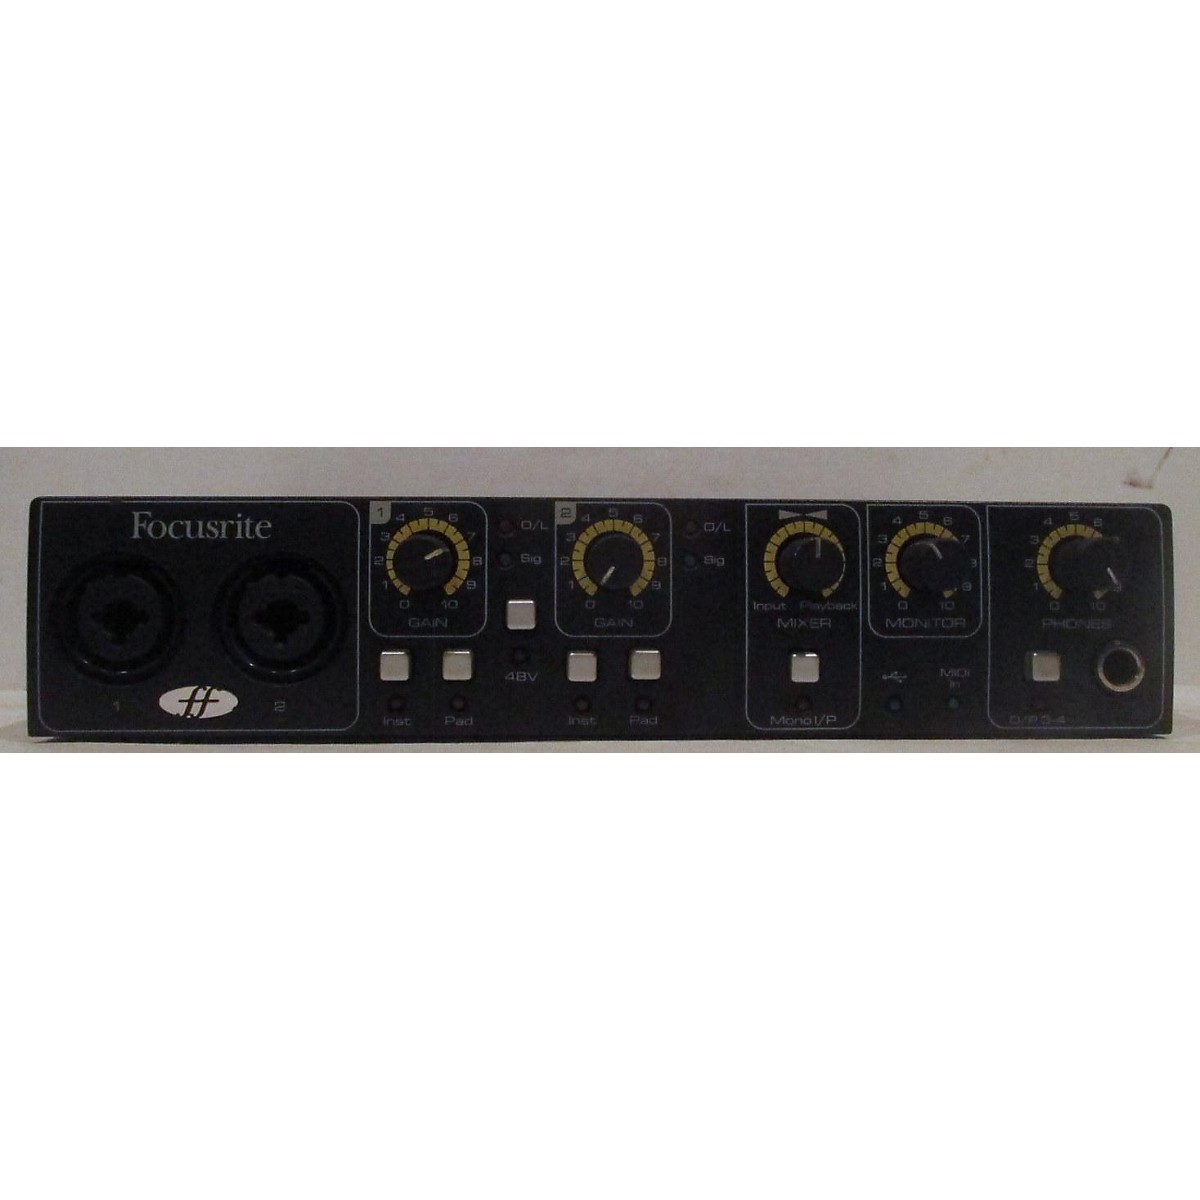 saffire mixcontrol output to computer speakers